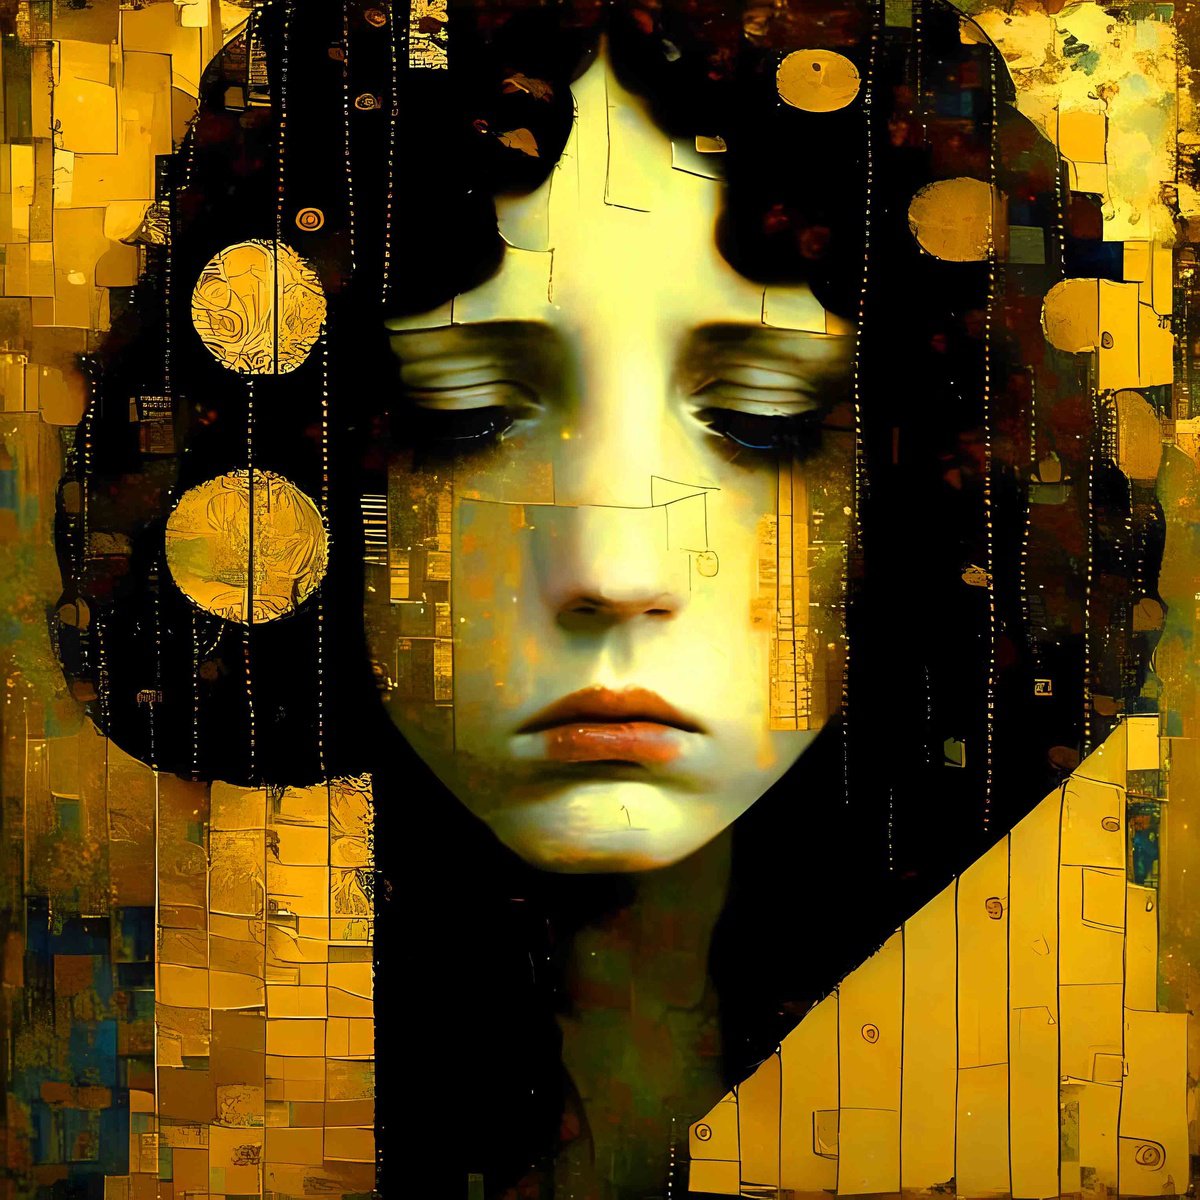 Golden tears - contemporary girl portrait, abstract Digital art print on canvas, black gol... by BAST